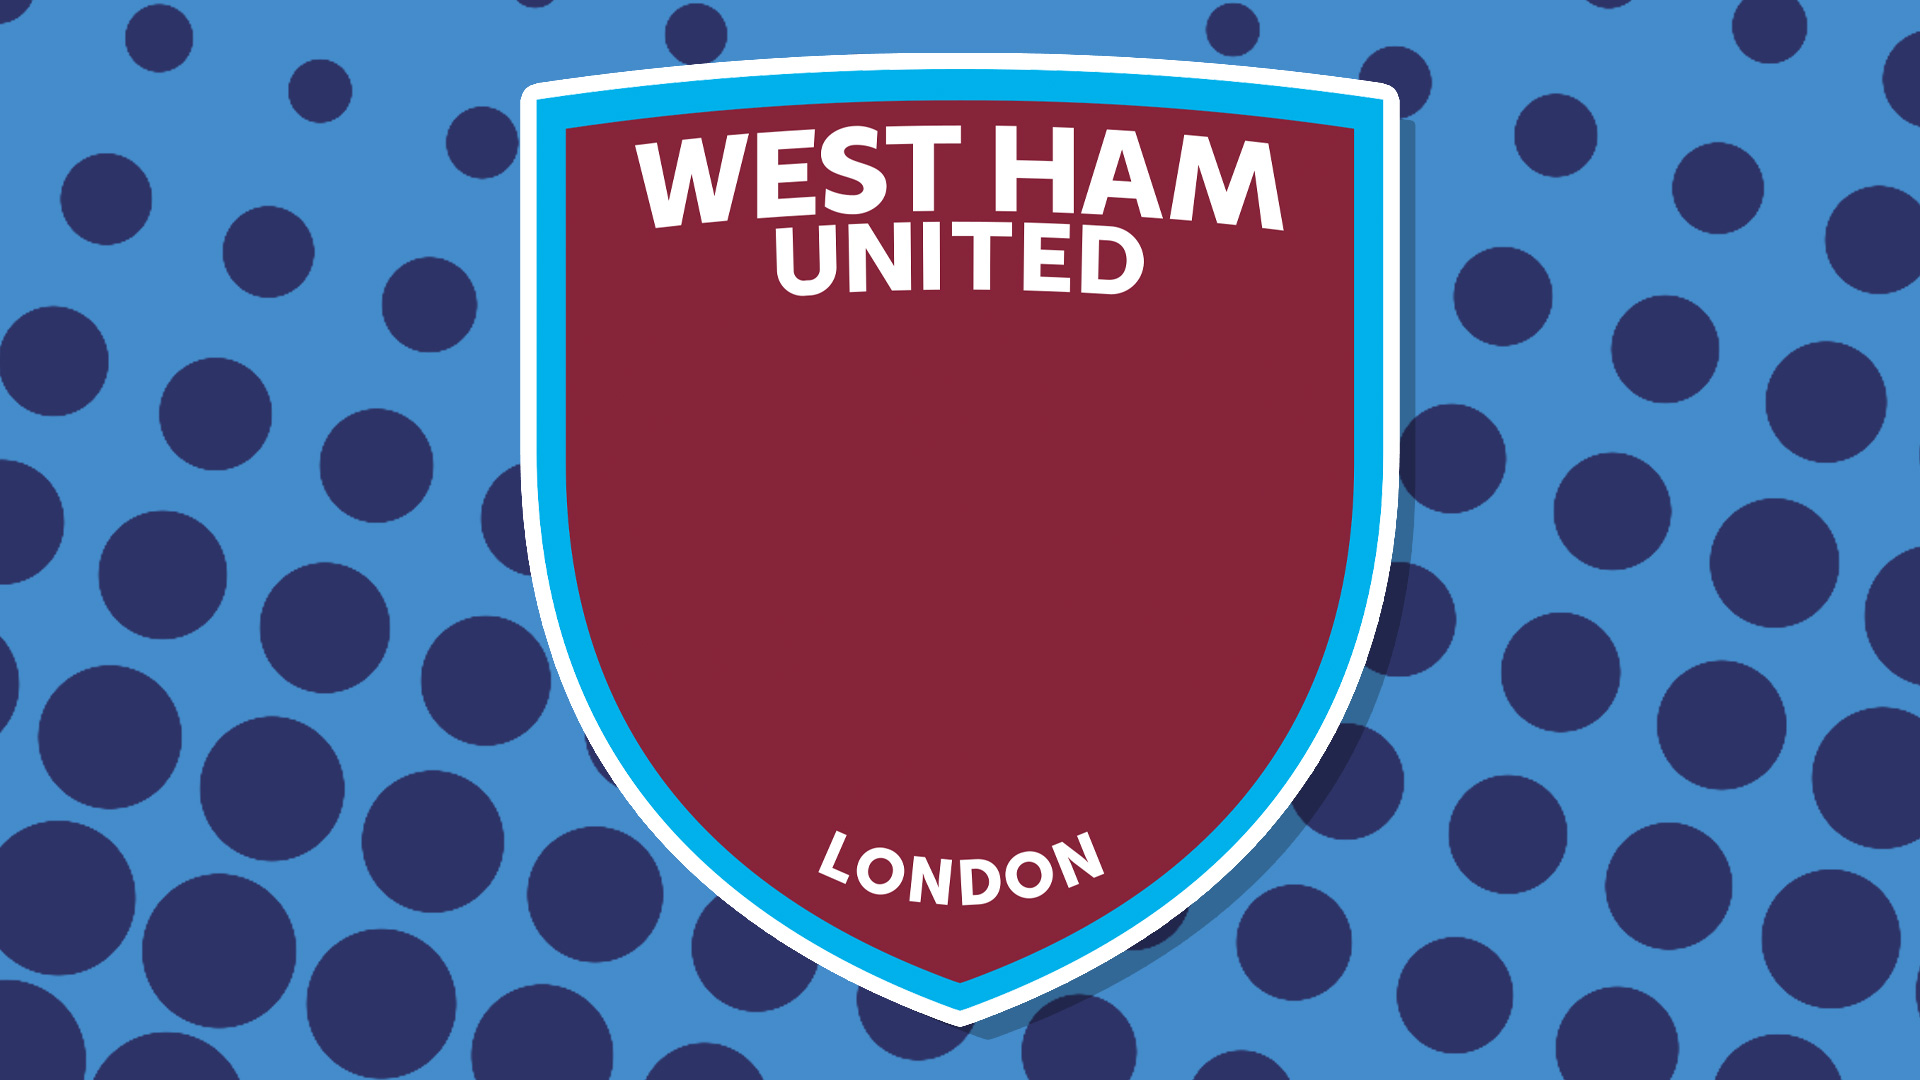 Can You Name The Football Badge/Logo? English Lower League Teams